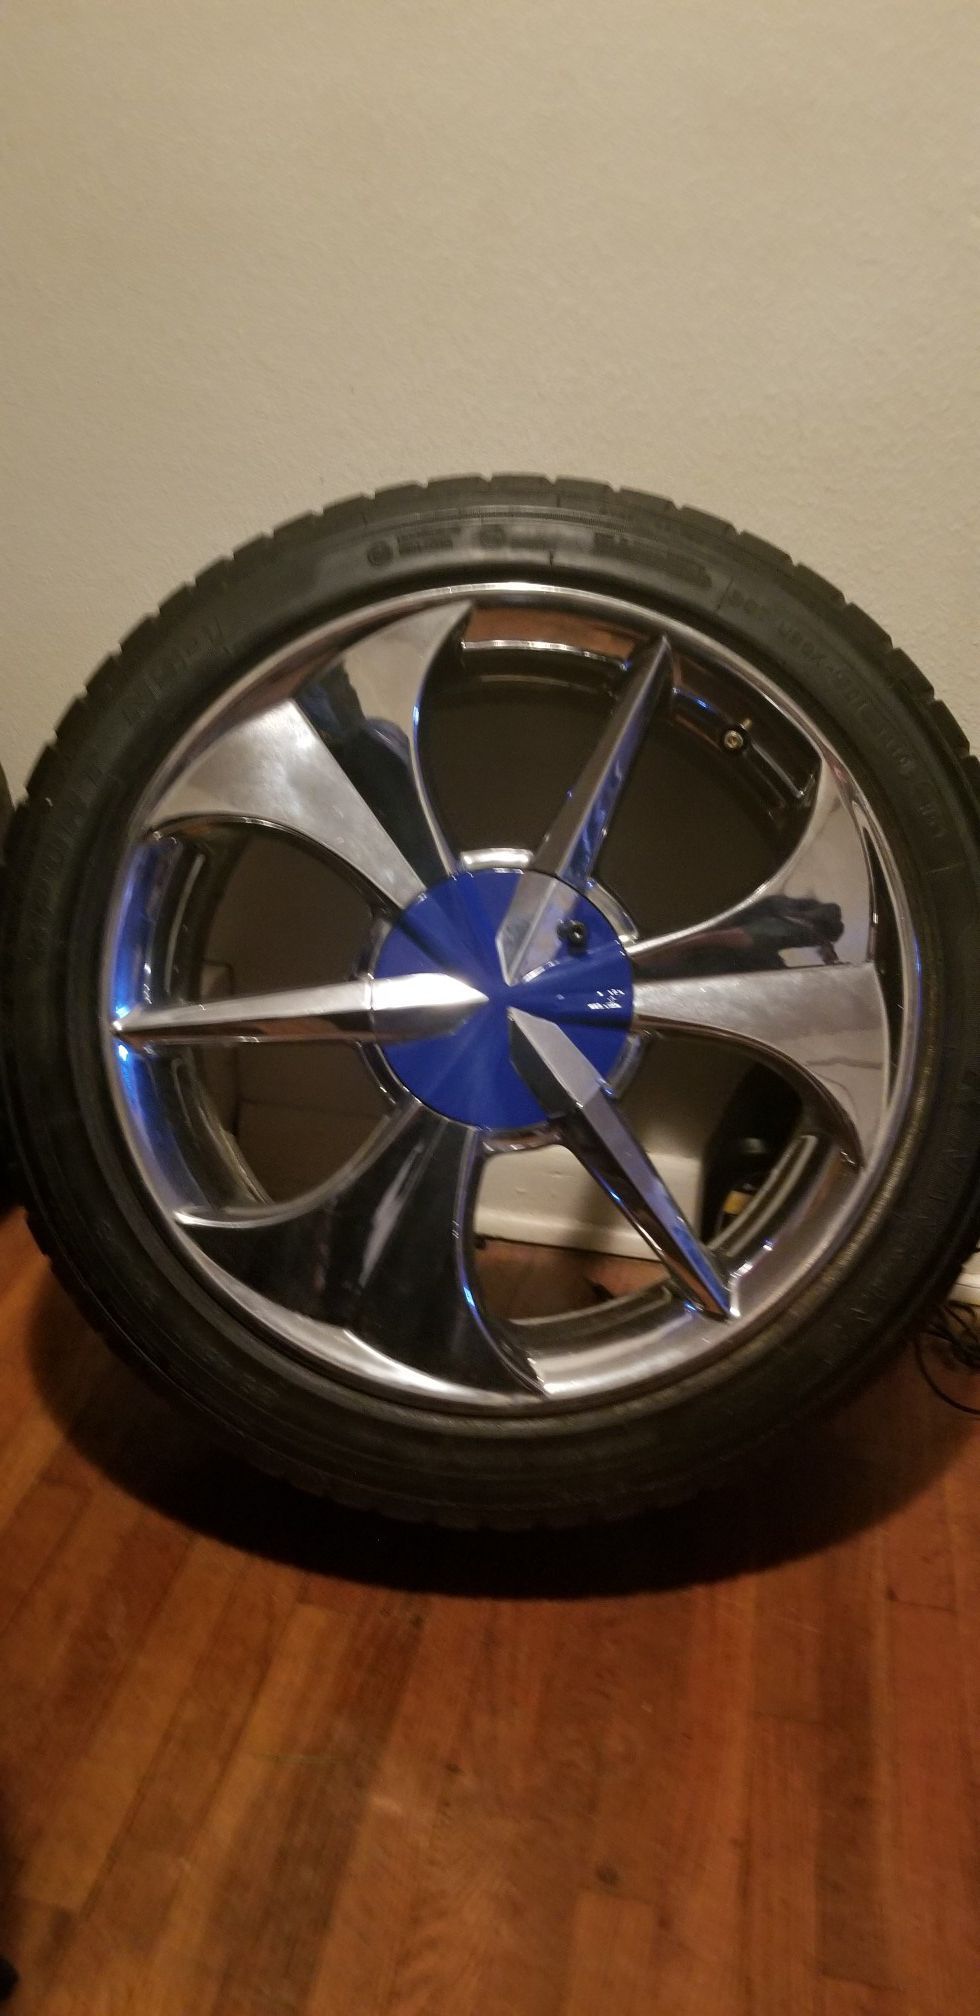 17" edge concept wheels